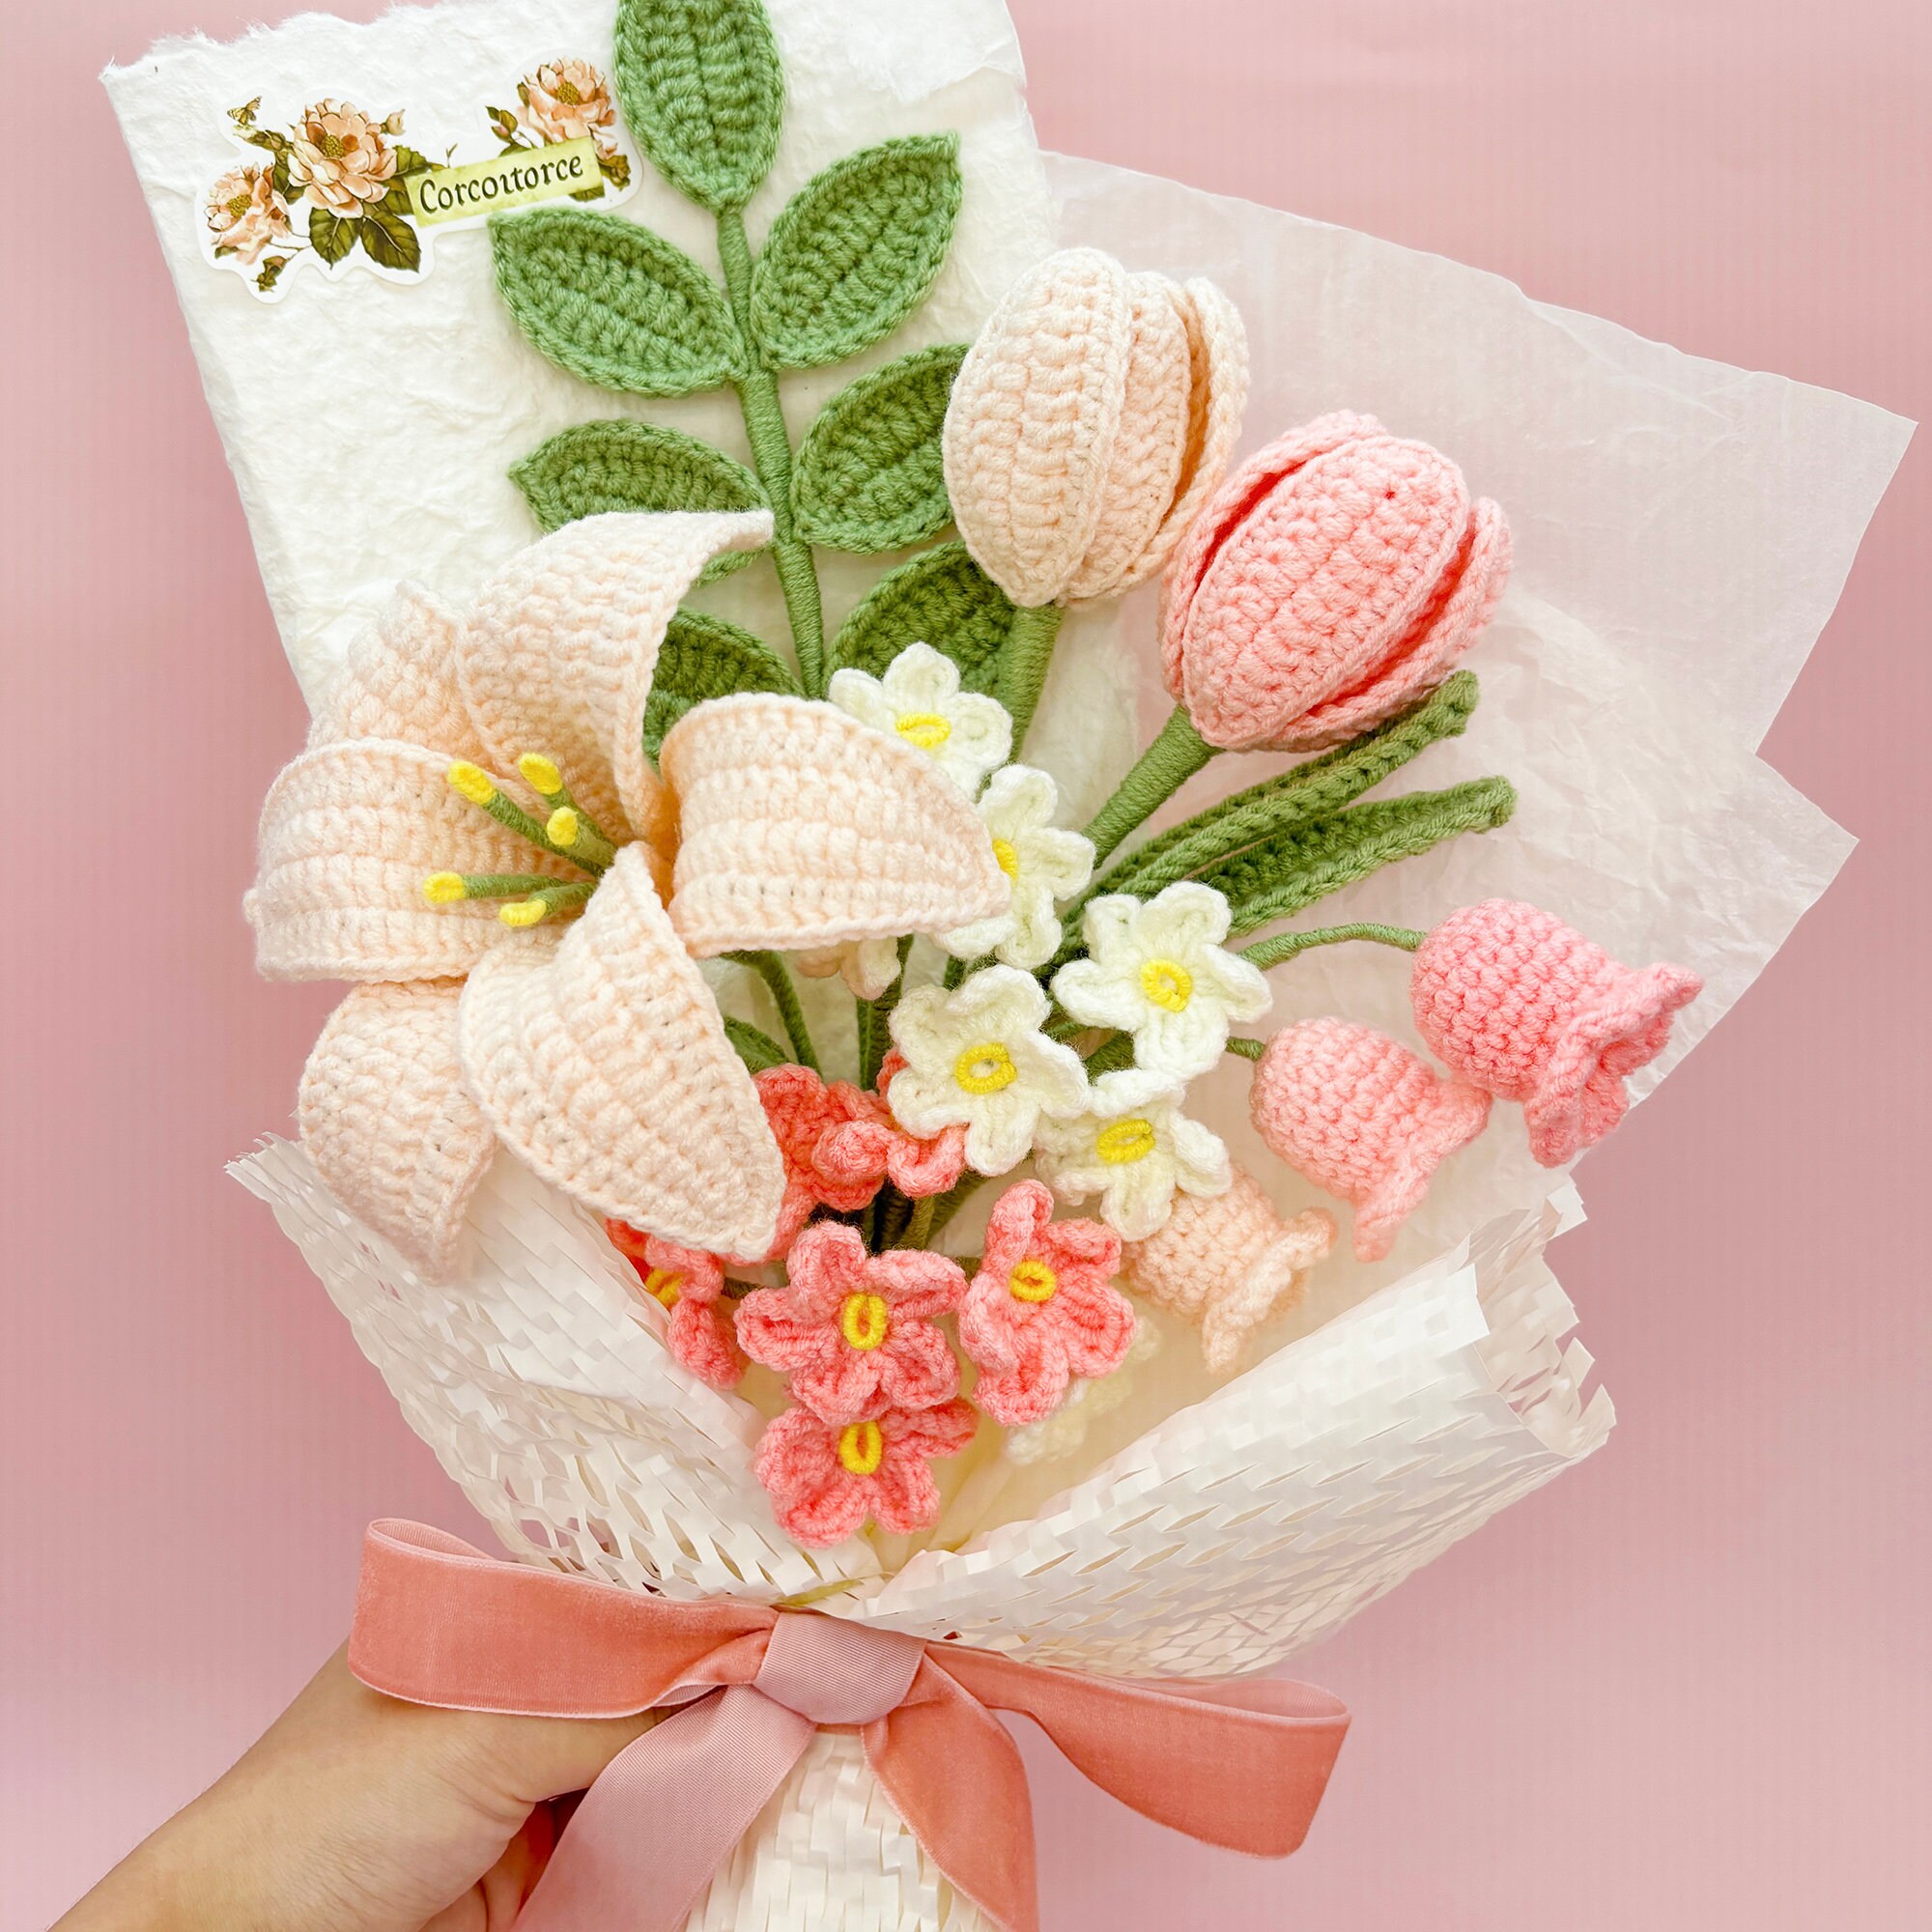 Crochet Gesang Flower Kits - Hookok - Hookok